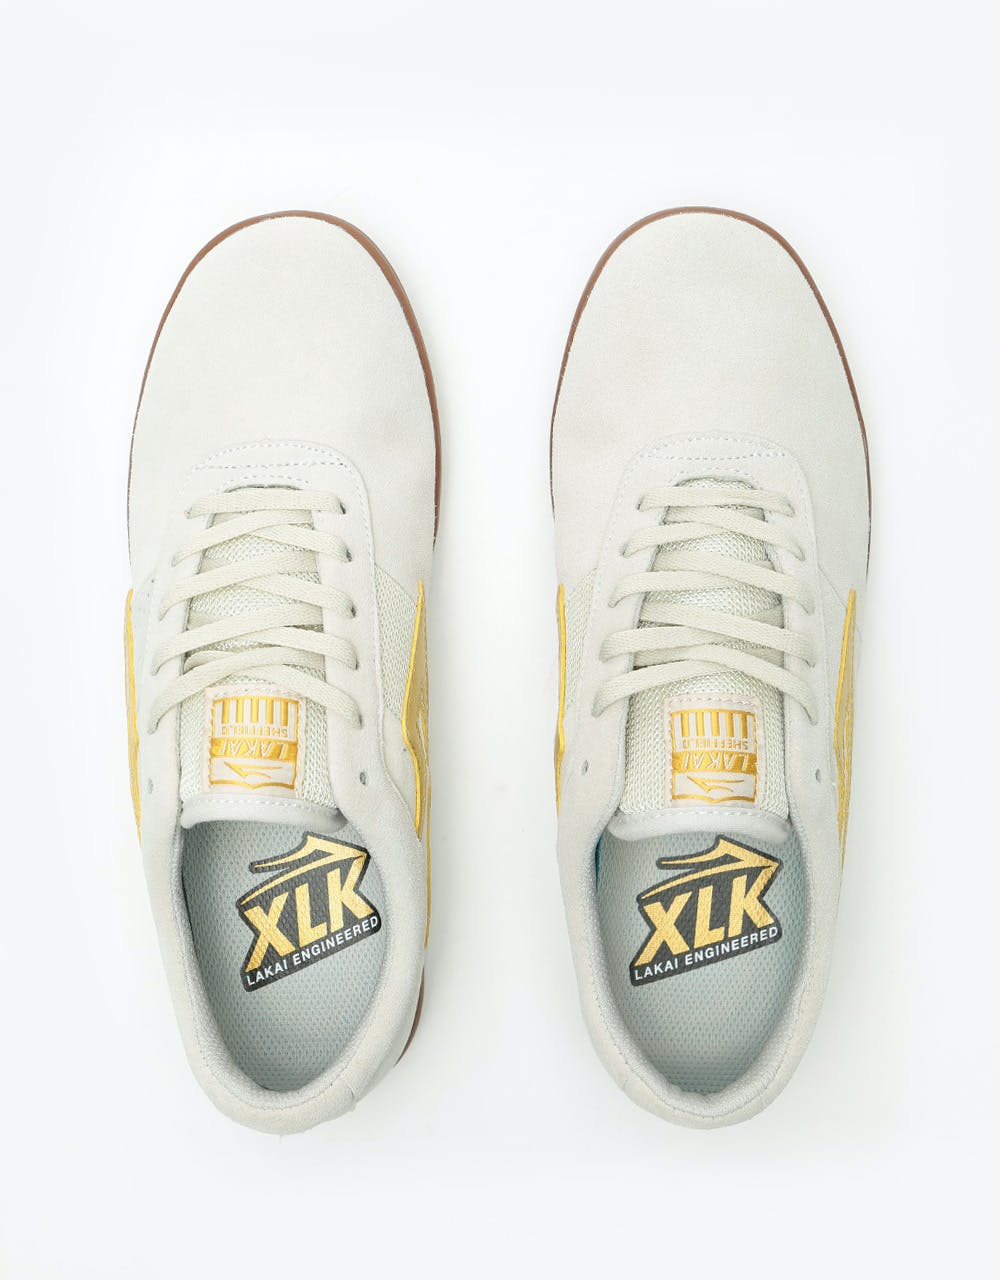 Lakai Sheffield XLK Skate Shoes - White/Gold Suede